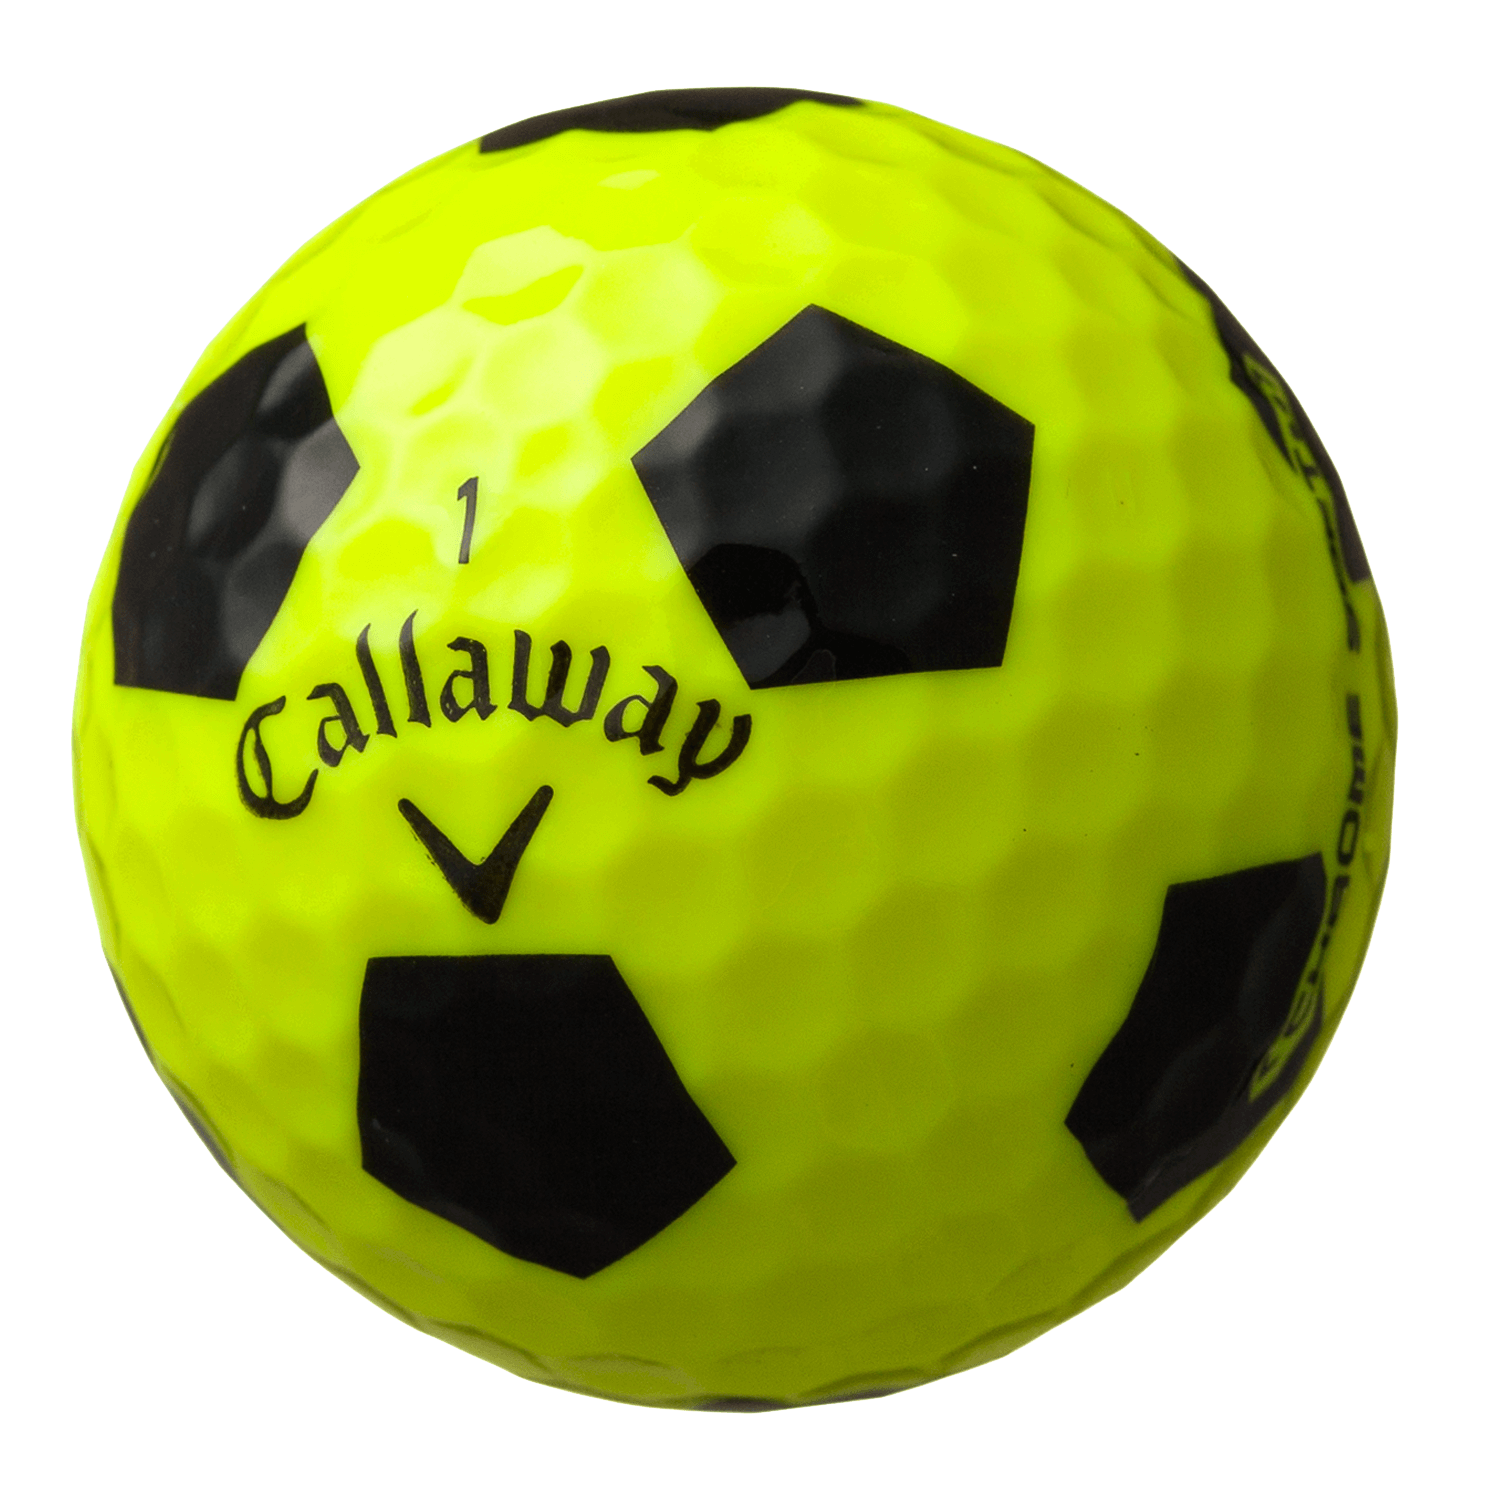 CHROME SOFT TRUVIS ボール 製品情報 | キャロウェイゴルフ Callaway